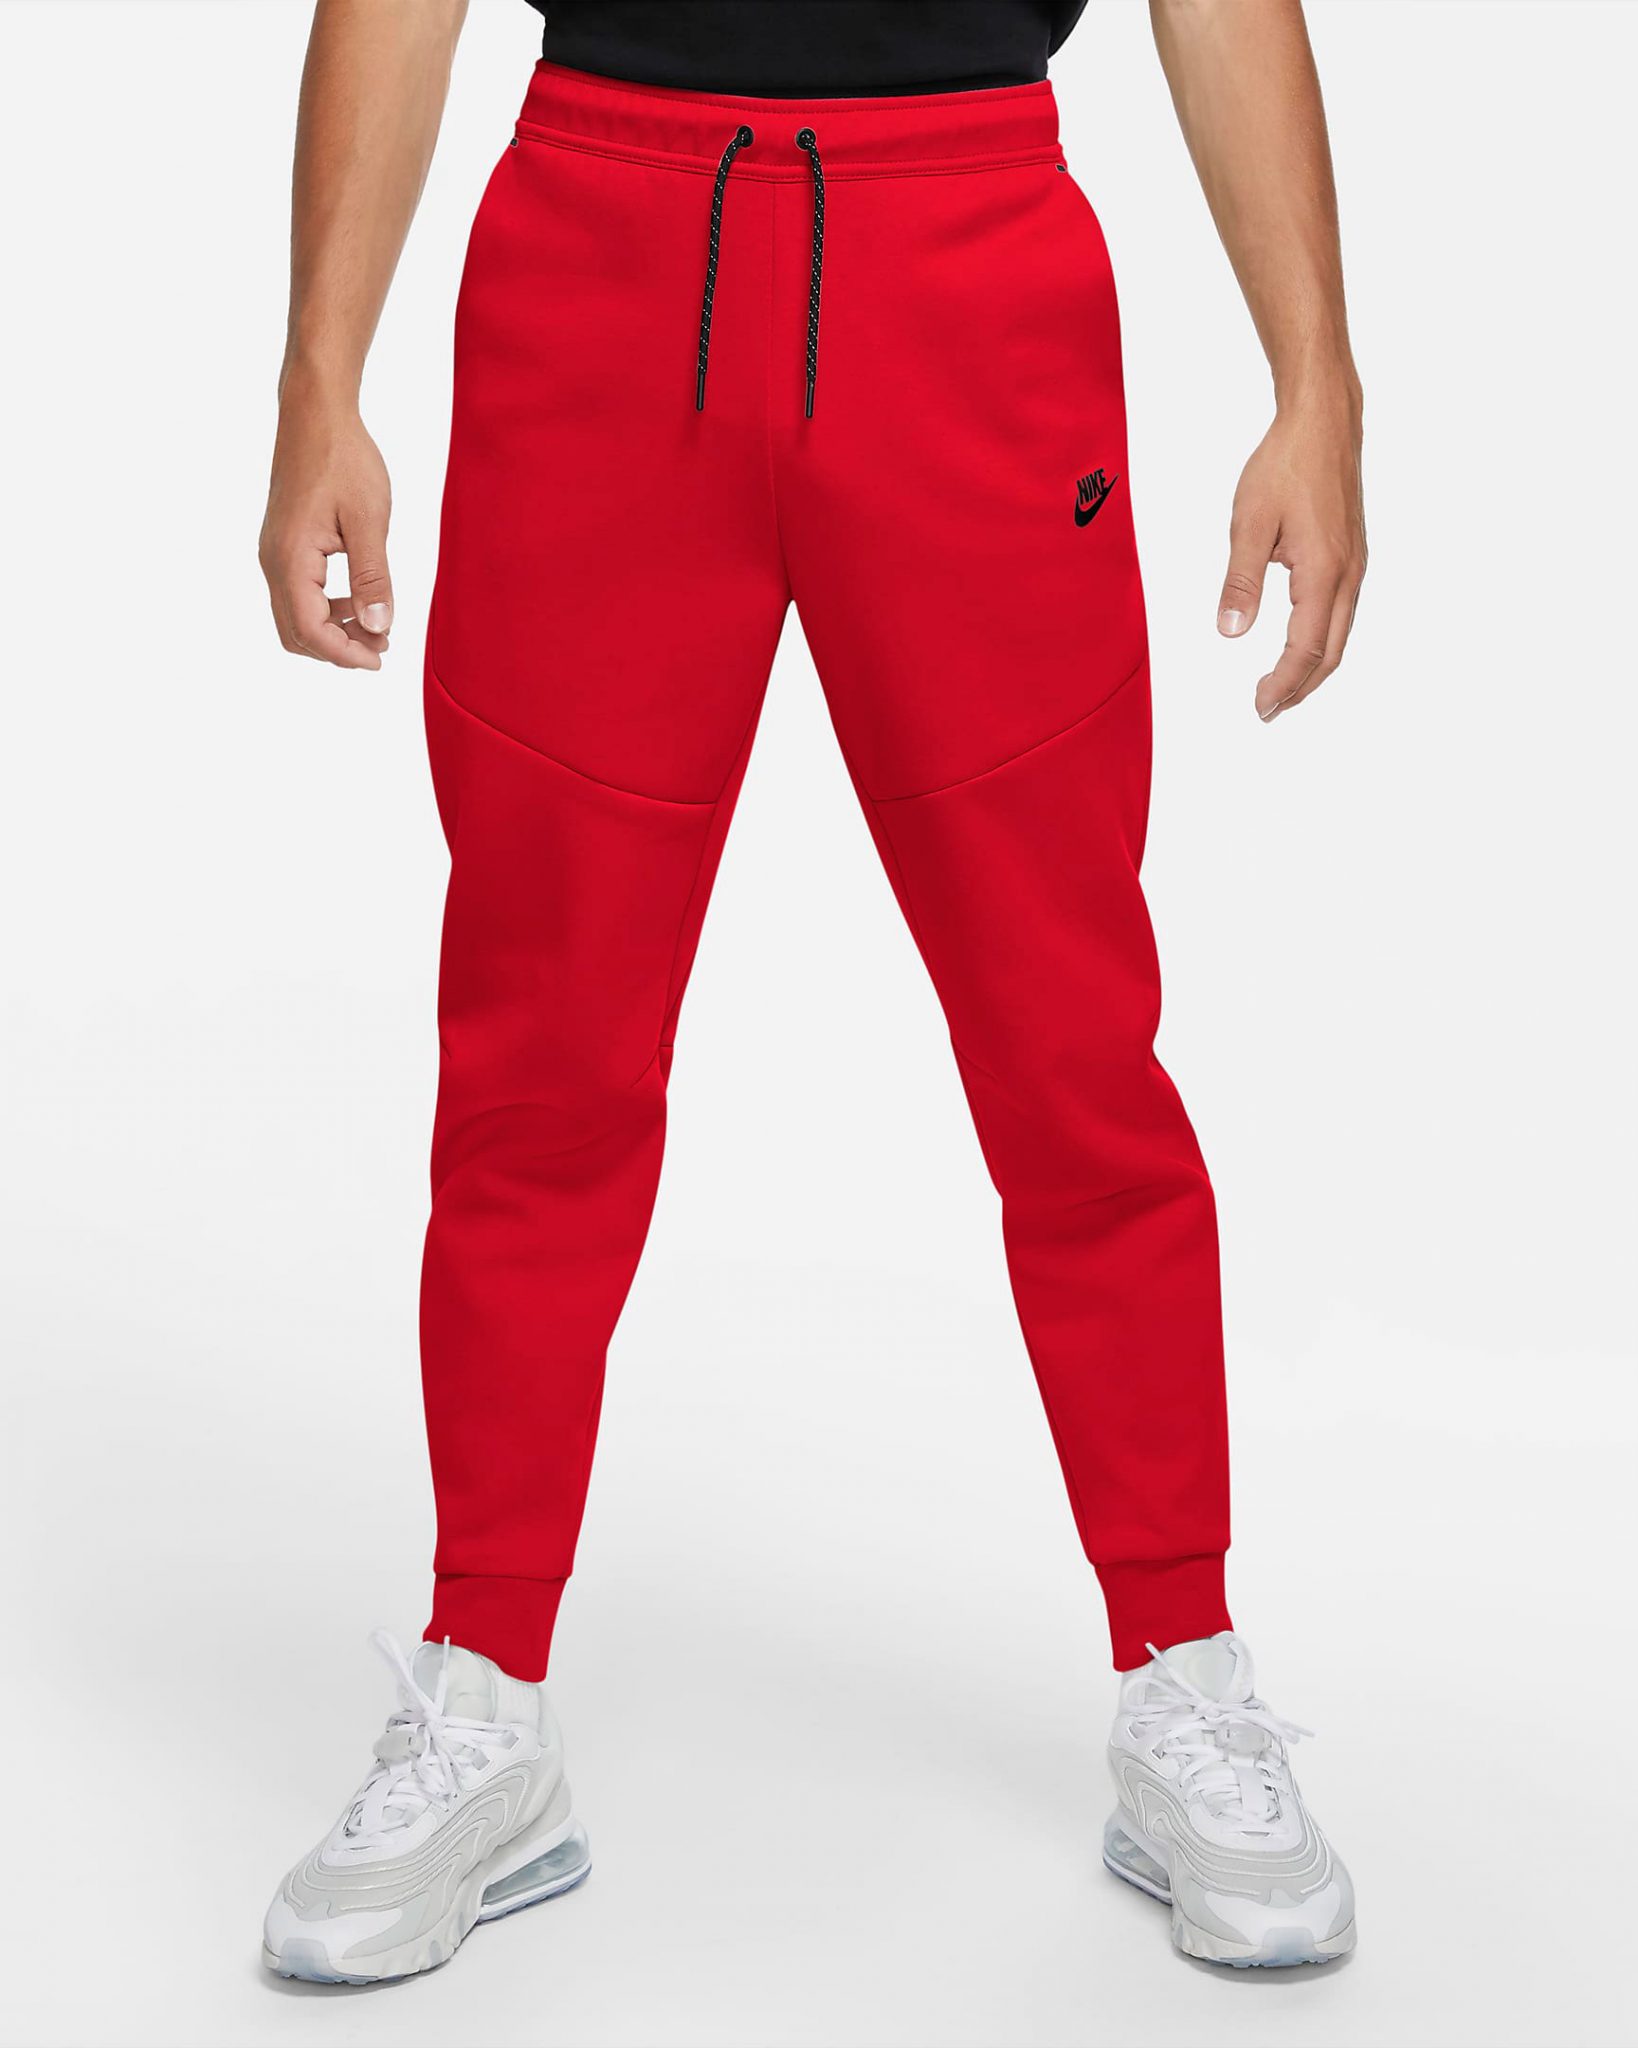 Nike Apparel Matches Air Jordan 4 Fire Red | SneakerFits.com